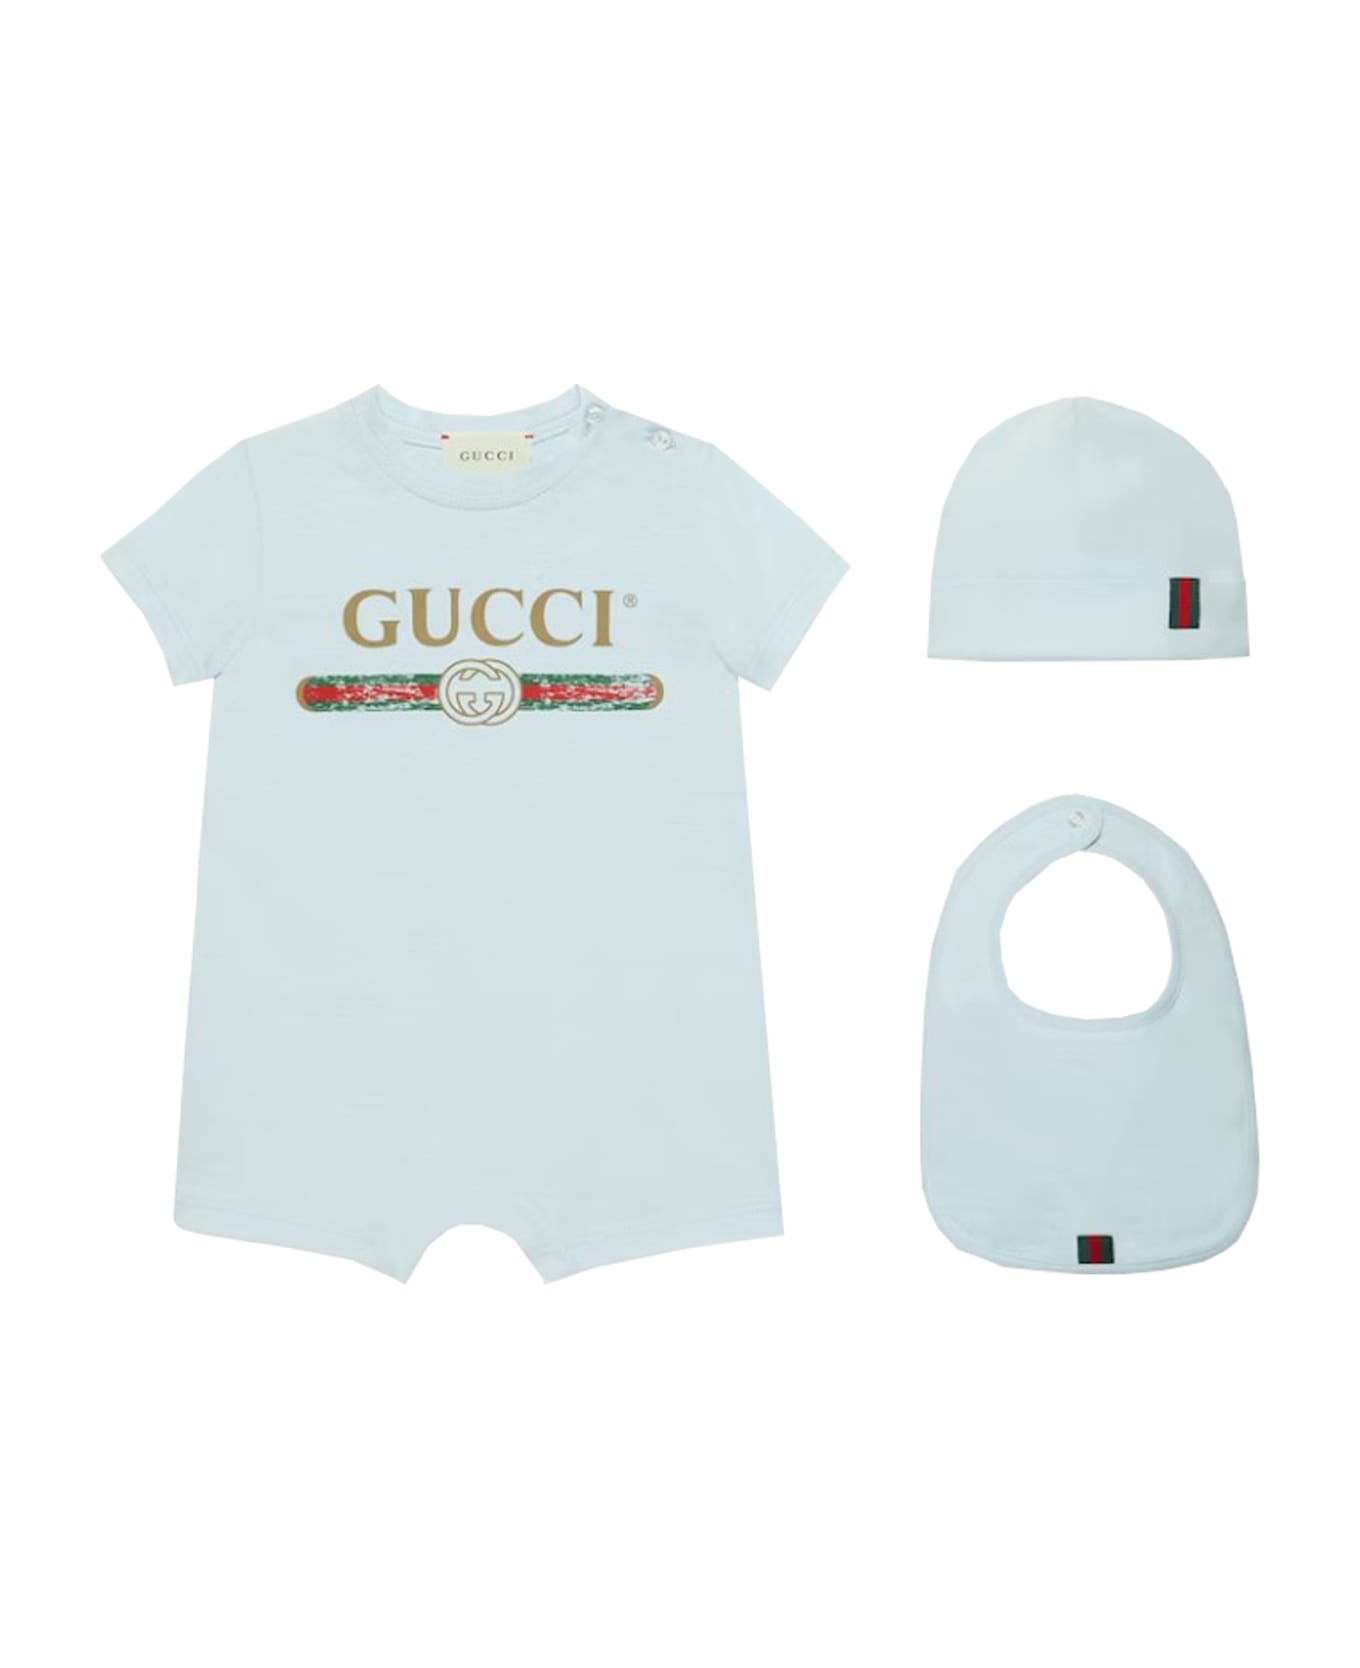 Gucci Gift Set - Light blue